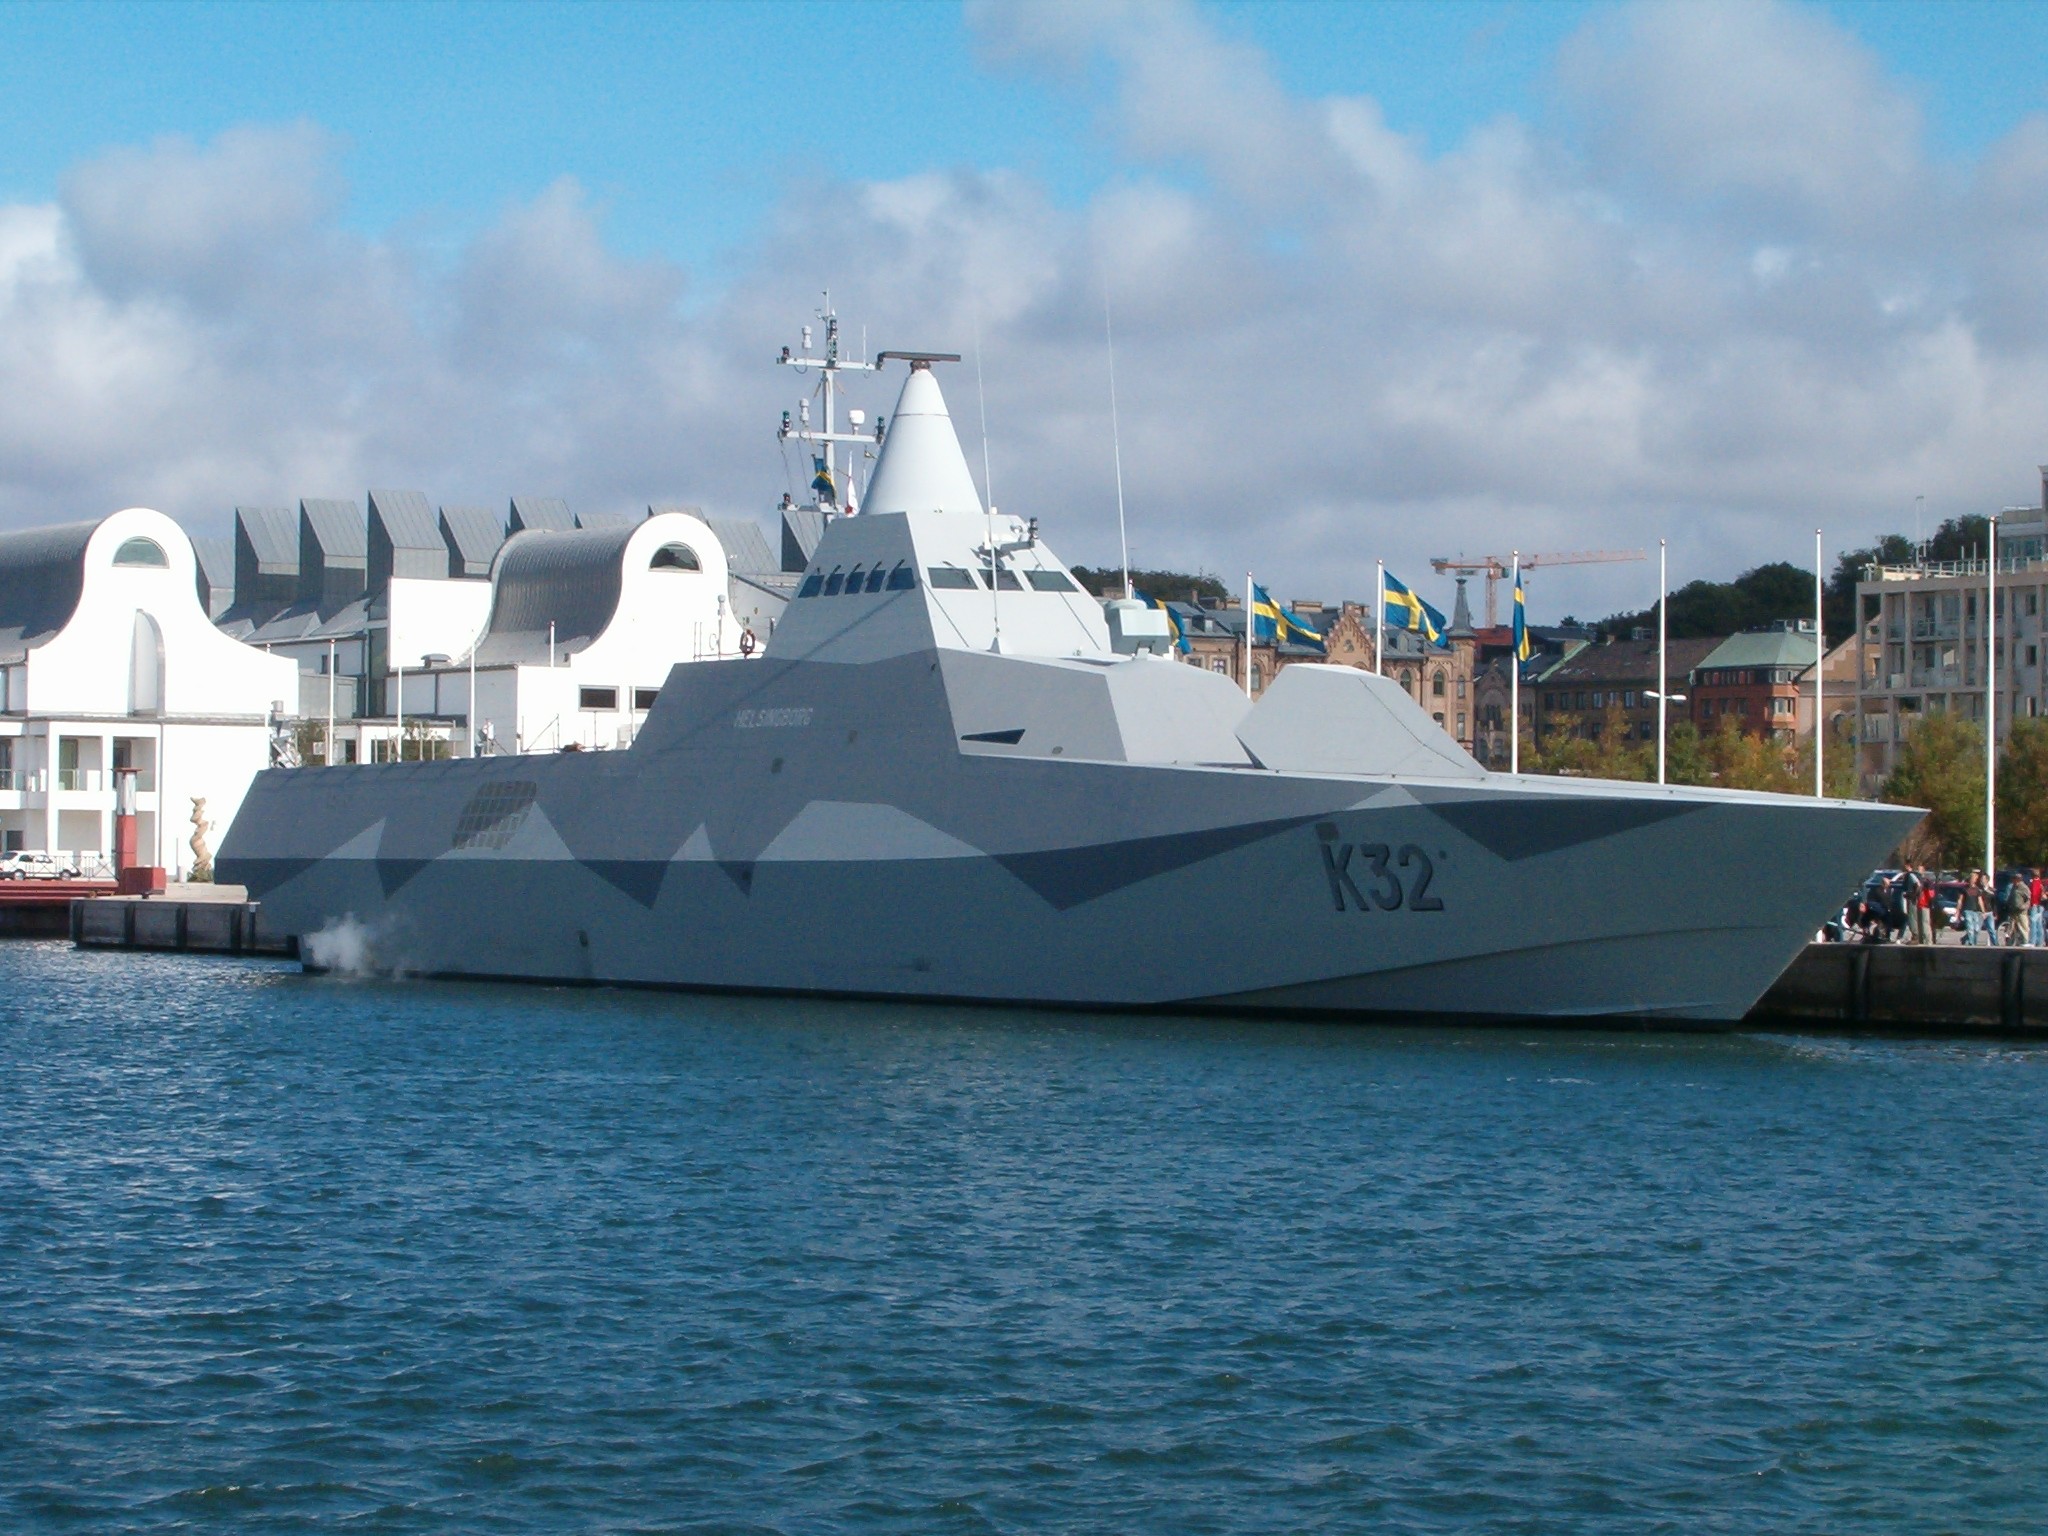 General 2048x1536 warship Visby Class Corvette military ship vehicle military vehicle